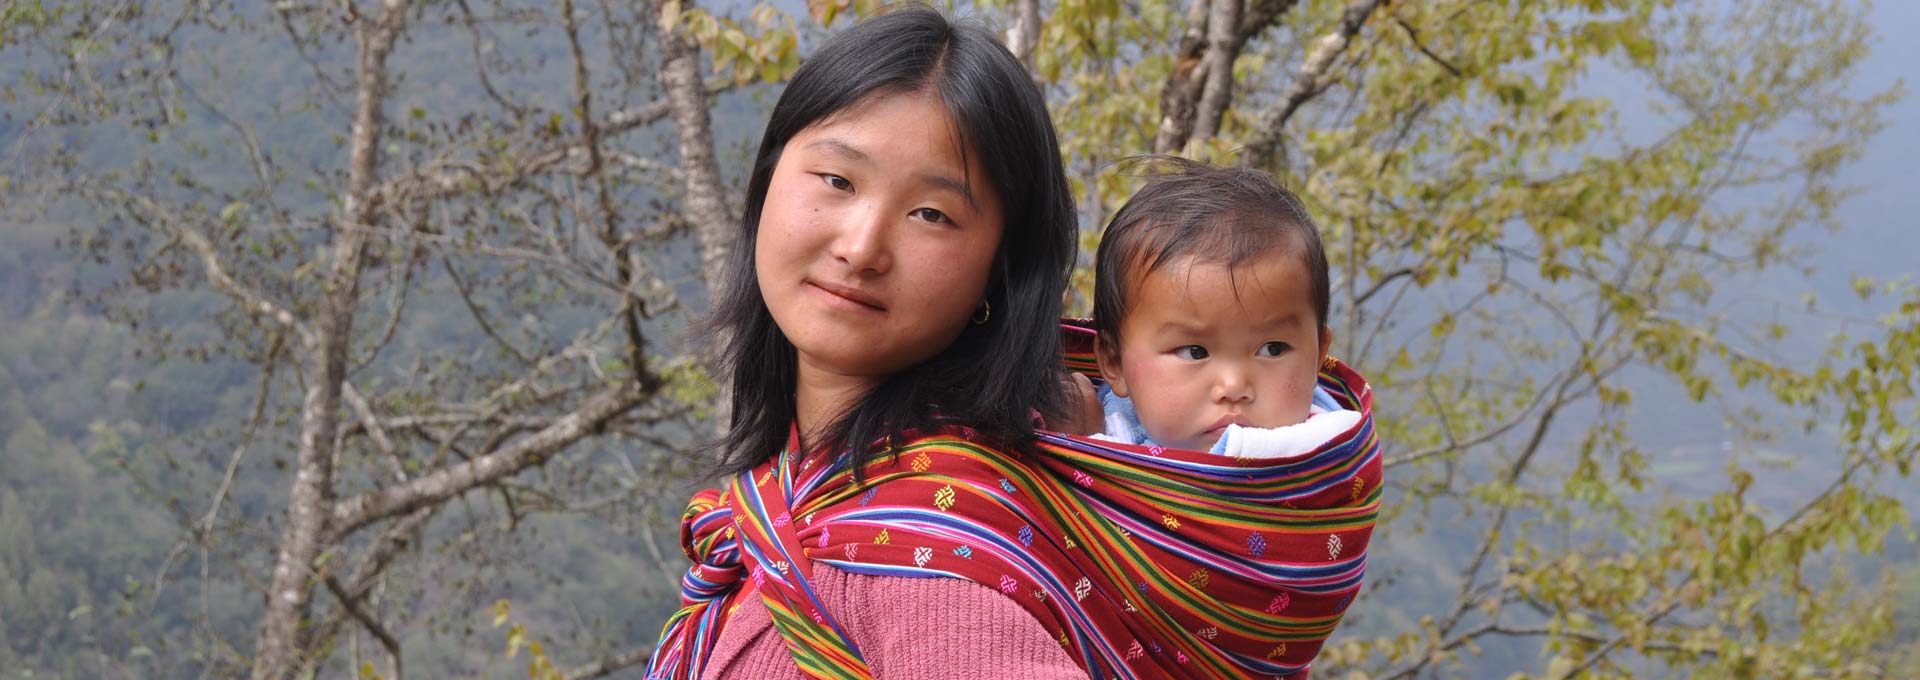 Bhutan-women-1920x680